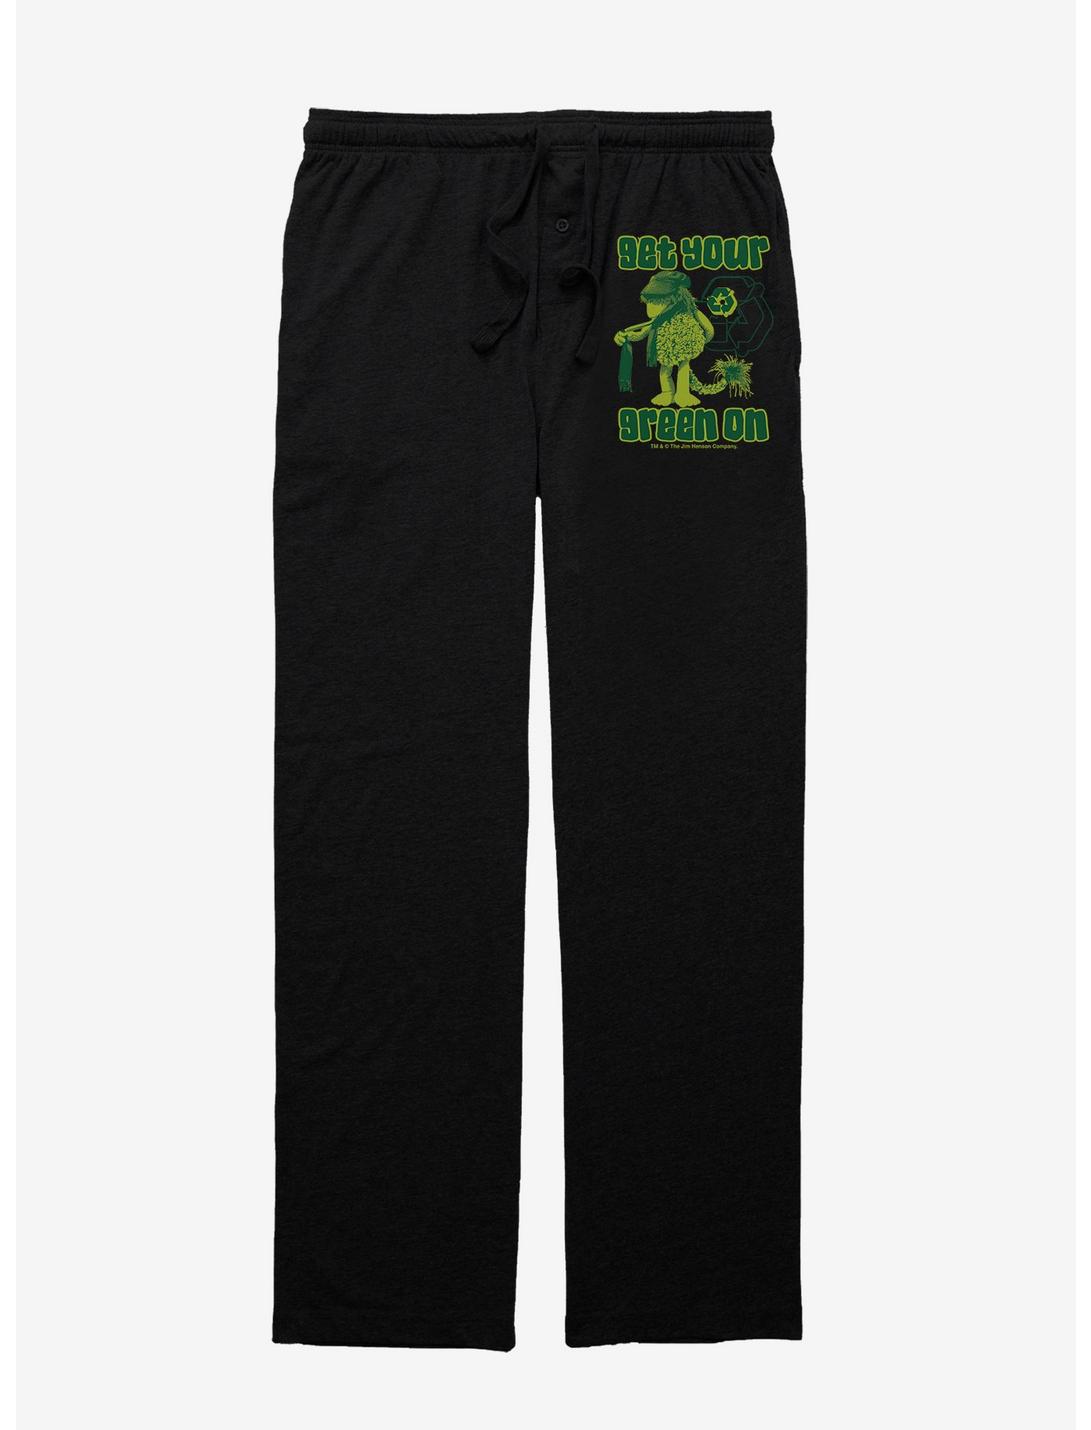 Jim Henson's Fraggle Rock Green On Pajama Pants, BLACK, hi-res